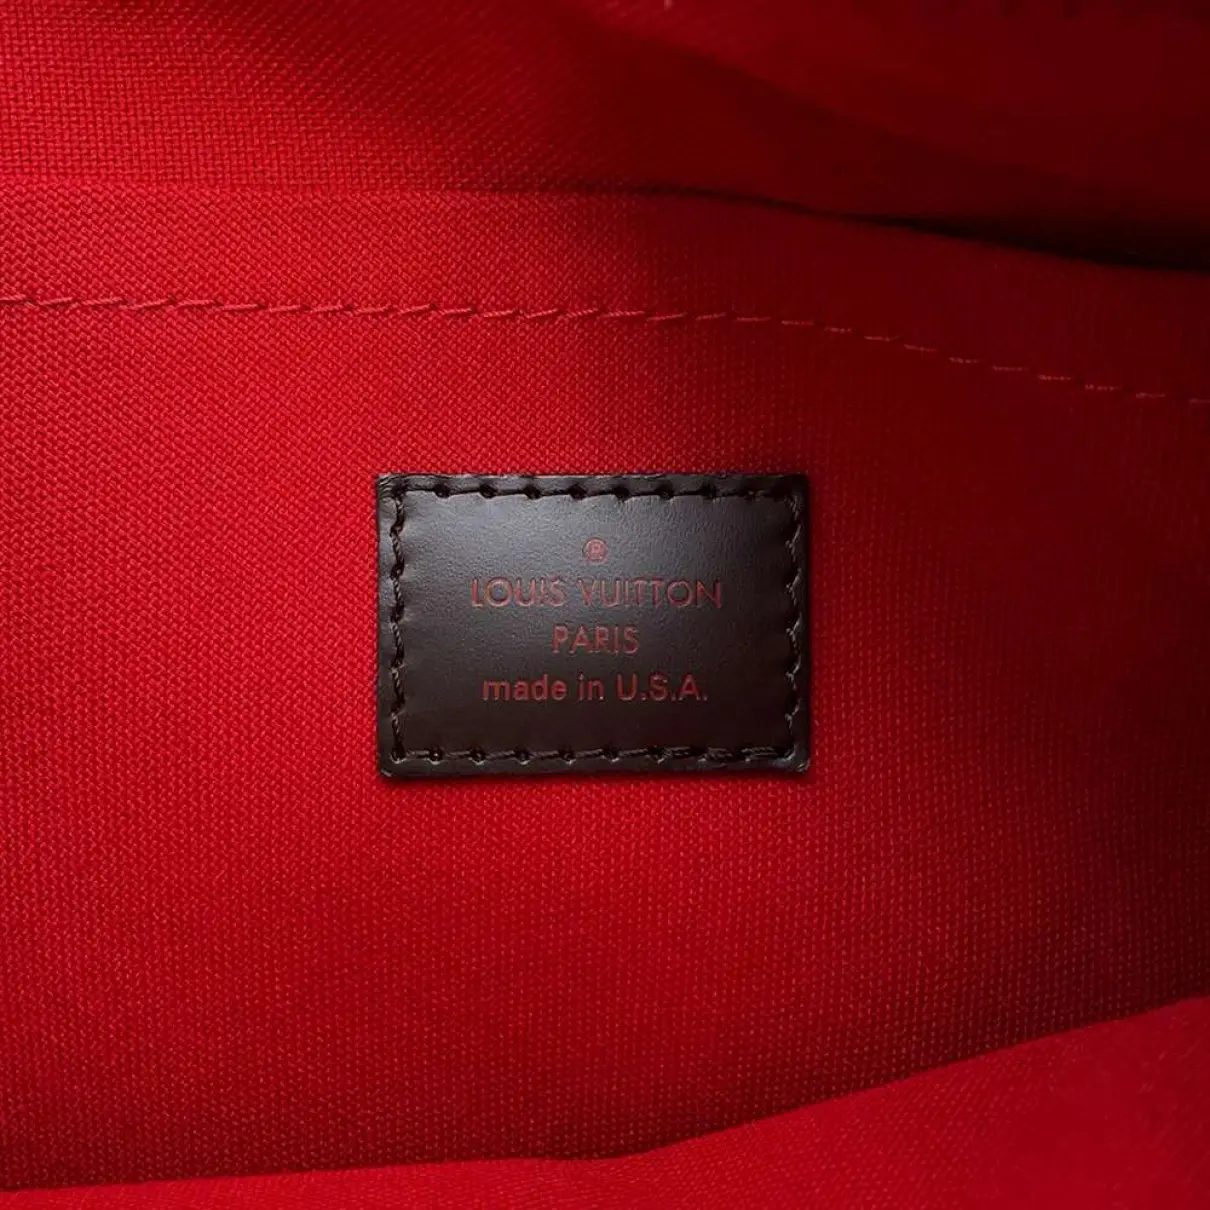 Buy Louis Vuitton Thames leather handbag online